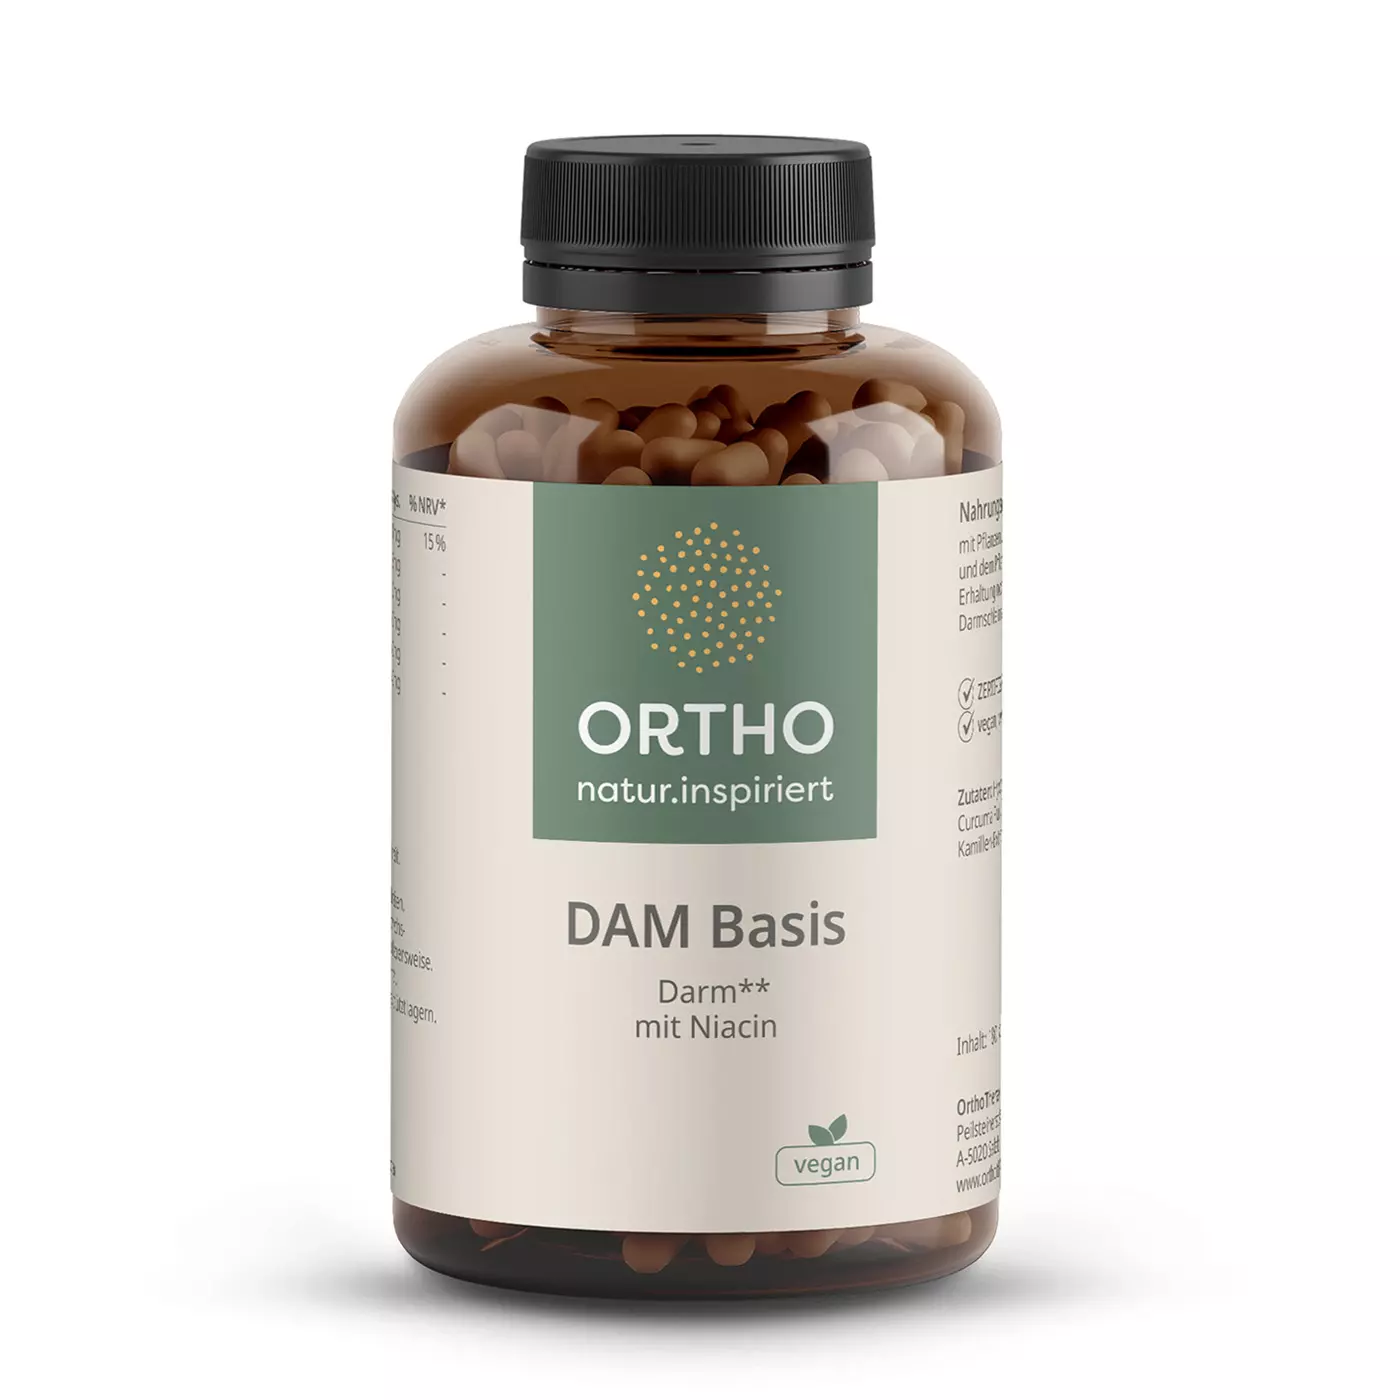 OrthoTherapia DAM Basis